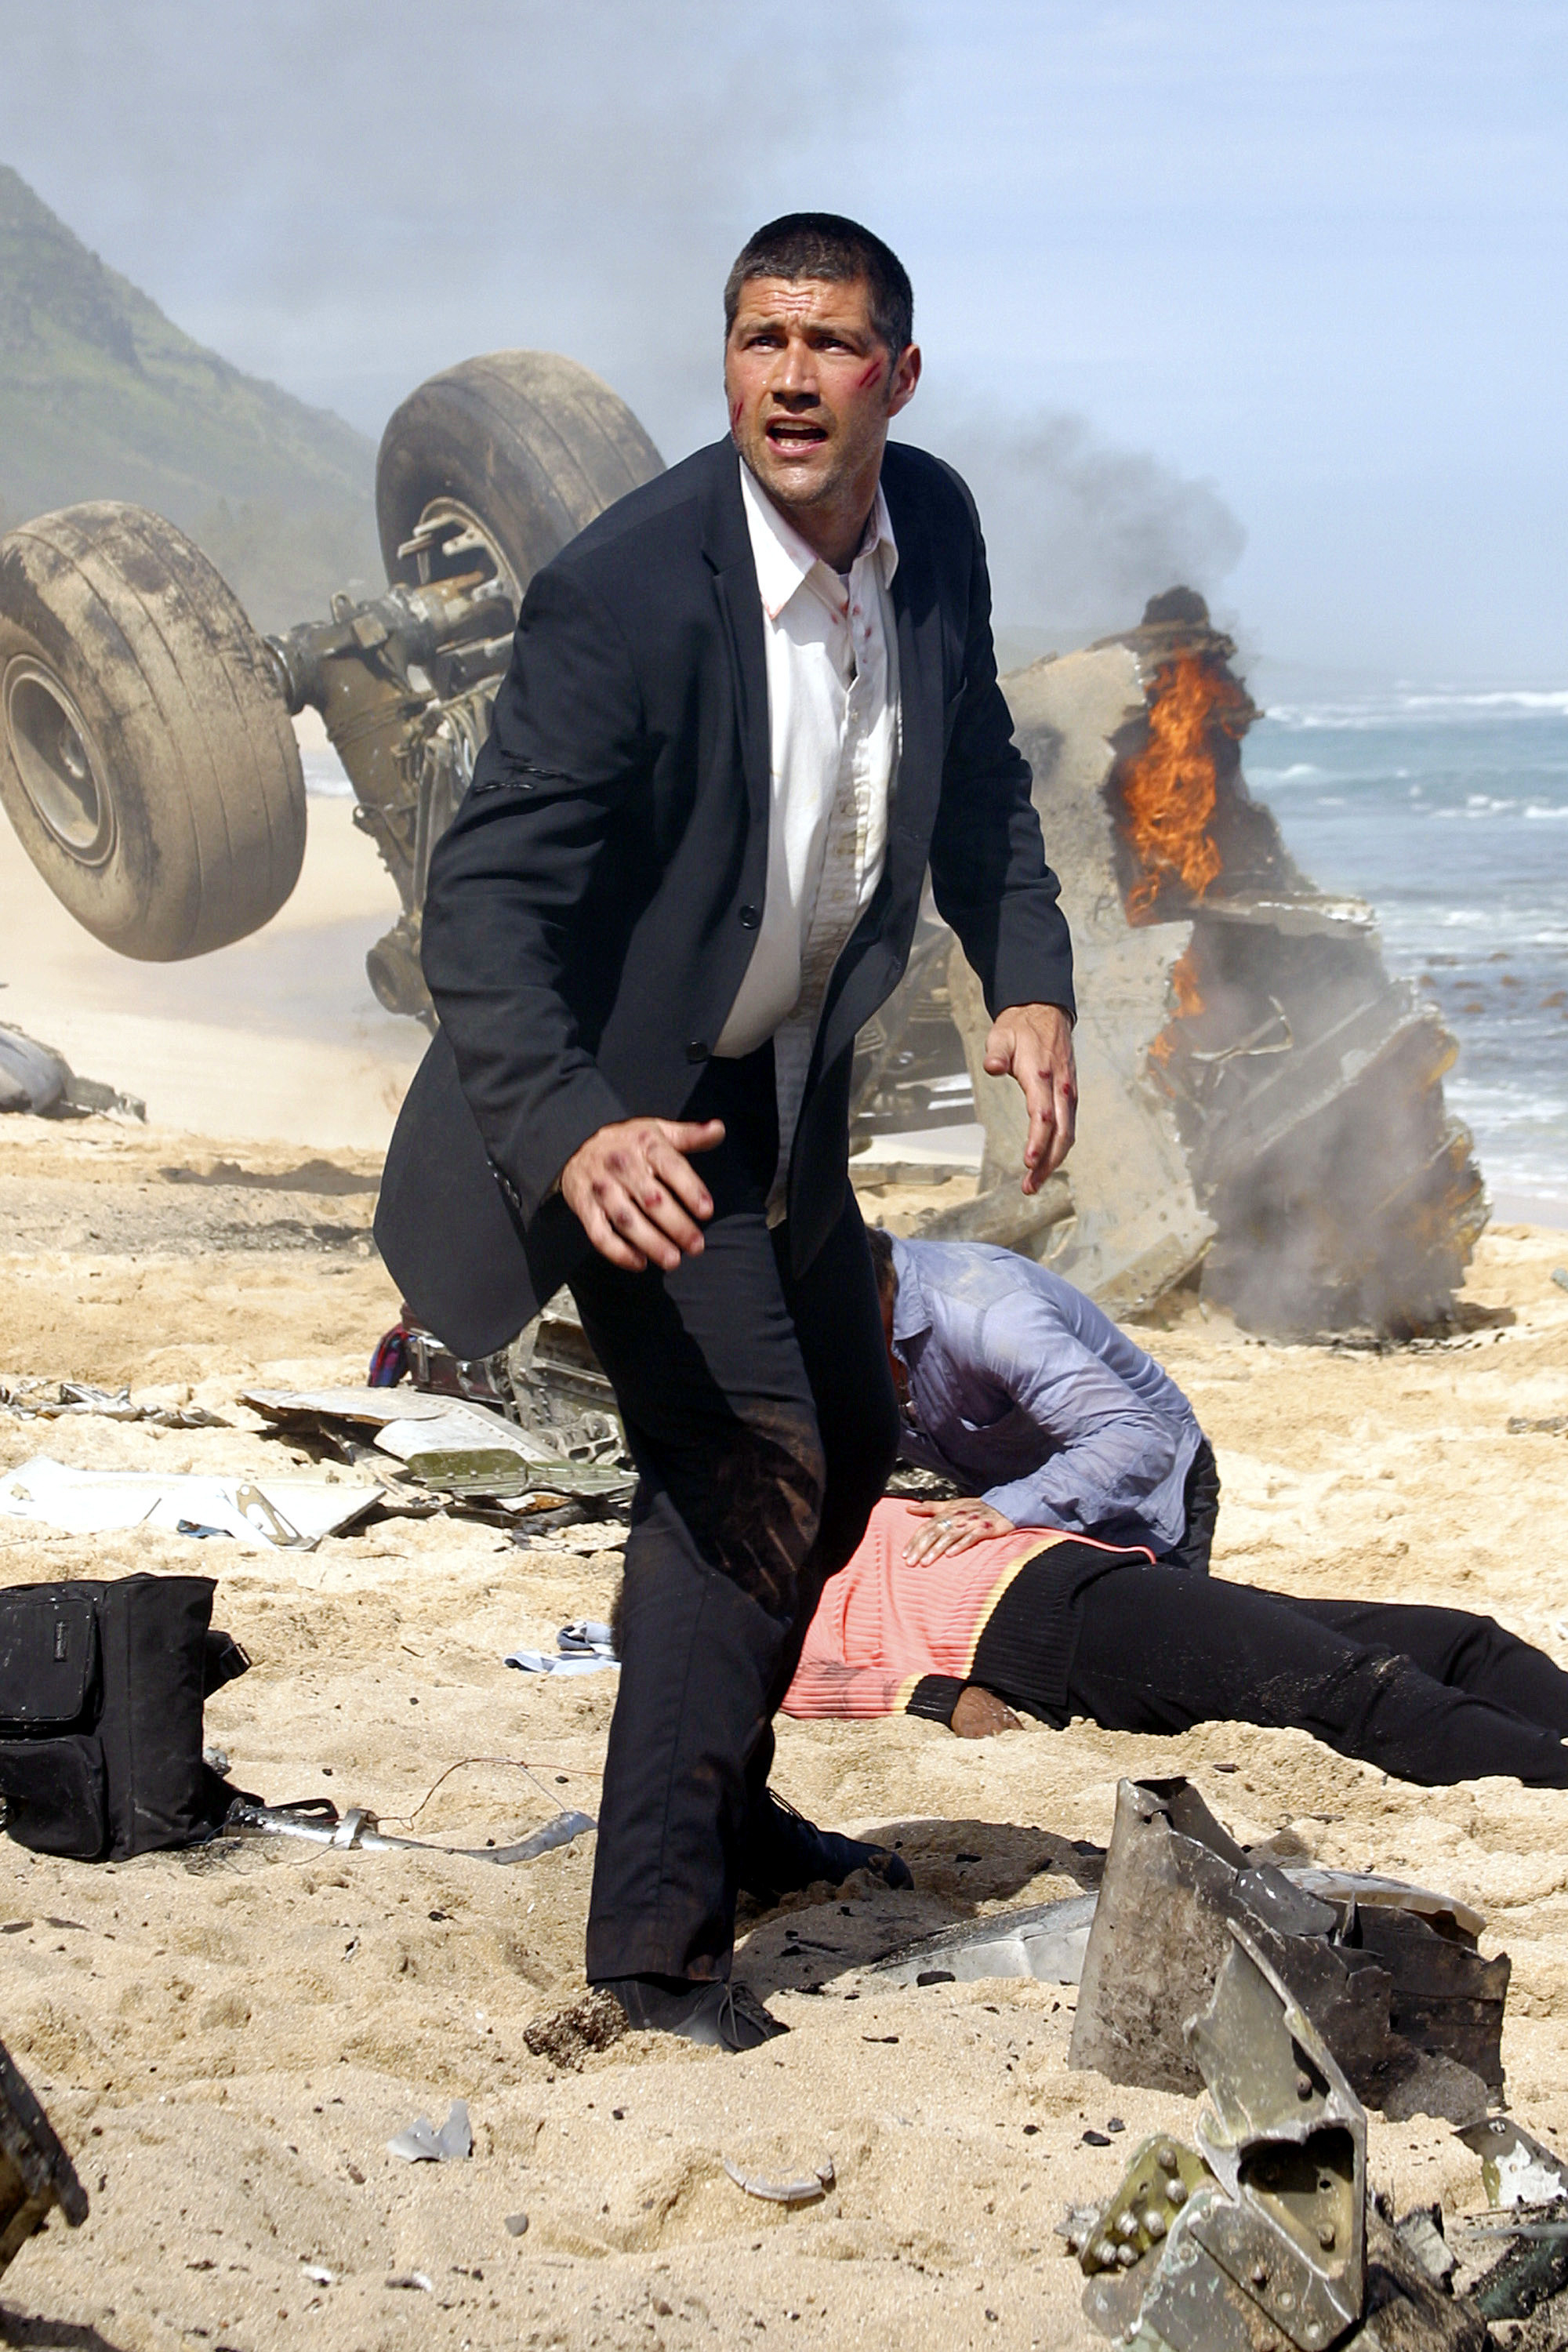 Jack on the beach immediately following the plane crash